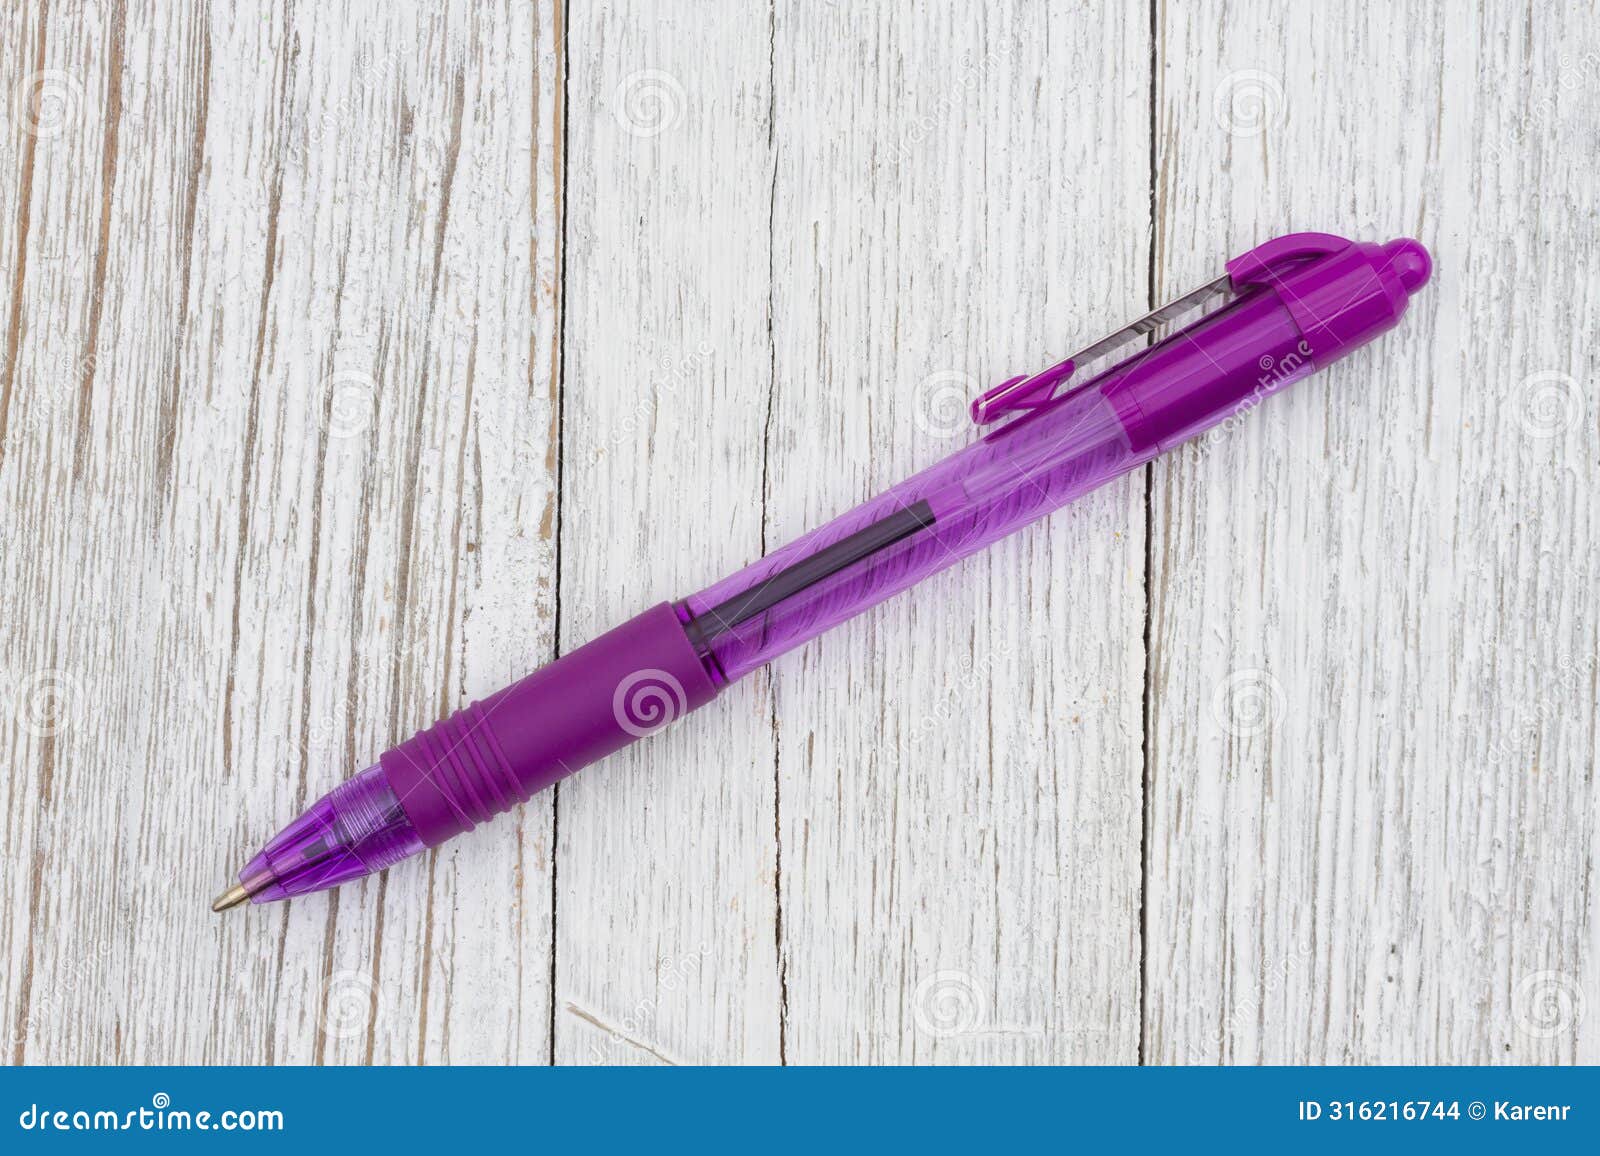 purple business ballpoint pen